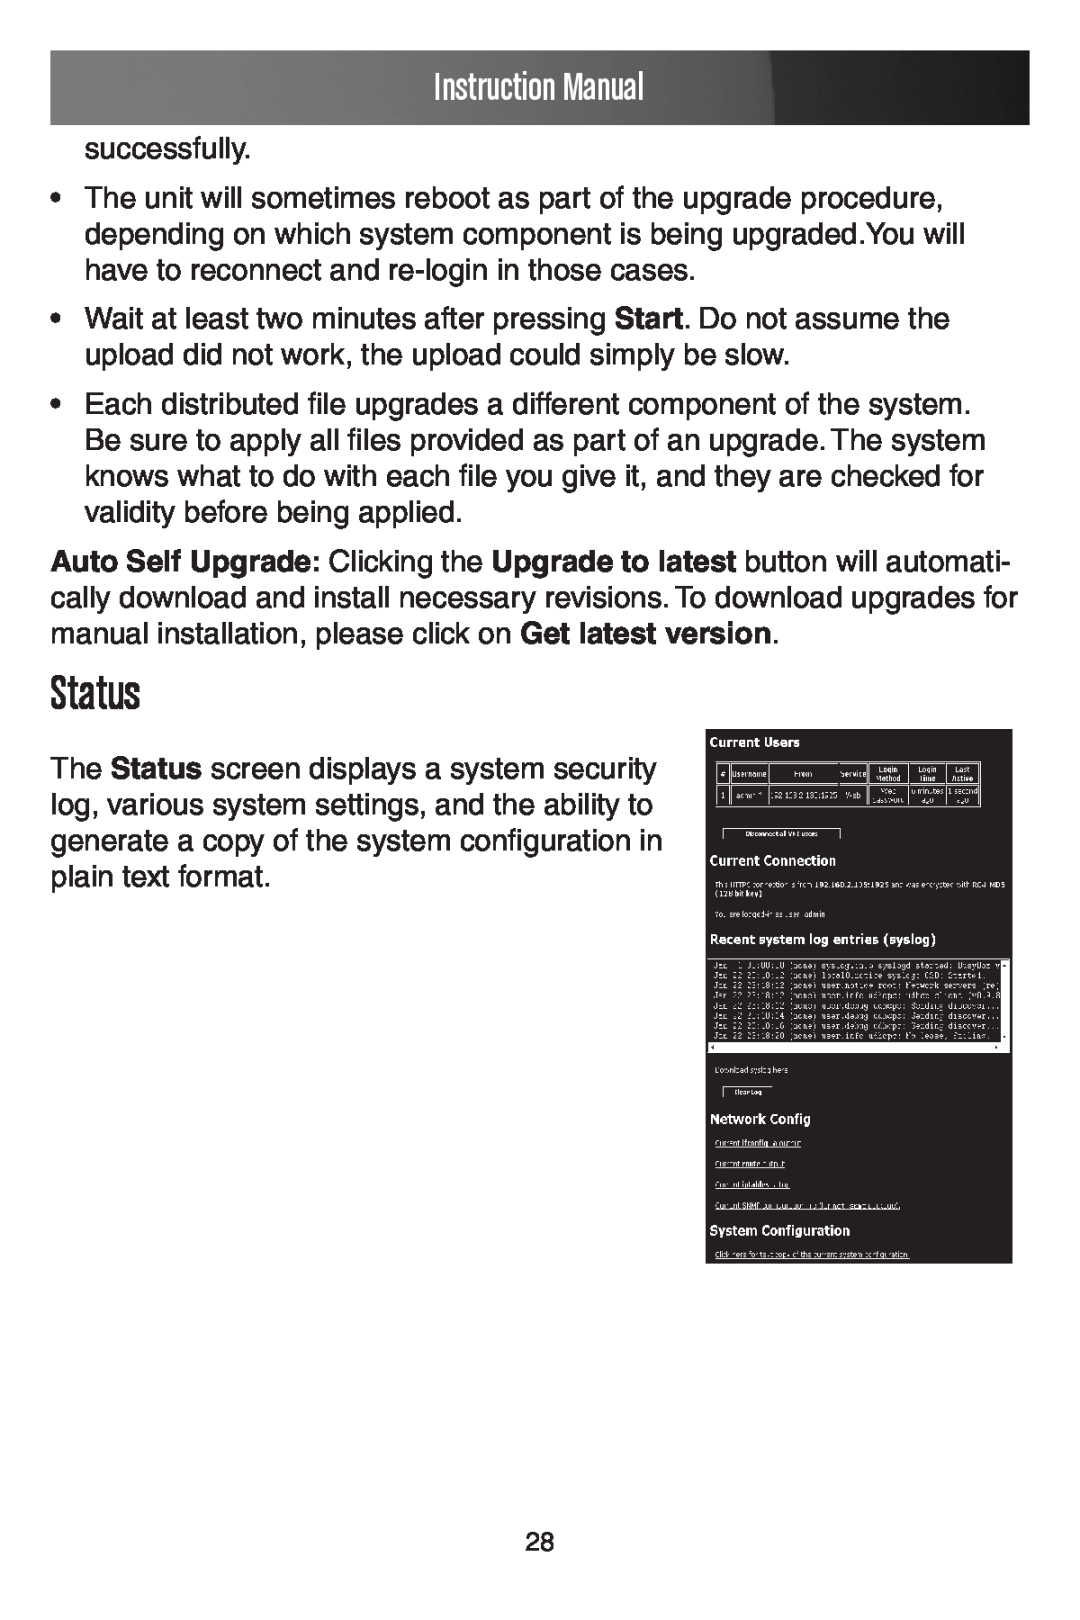 StarTech.com SV441DUSBI instruction manual Status, Instruction Manual 